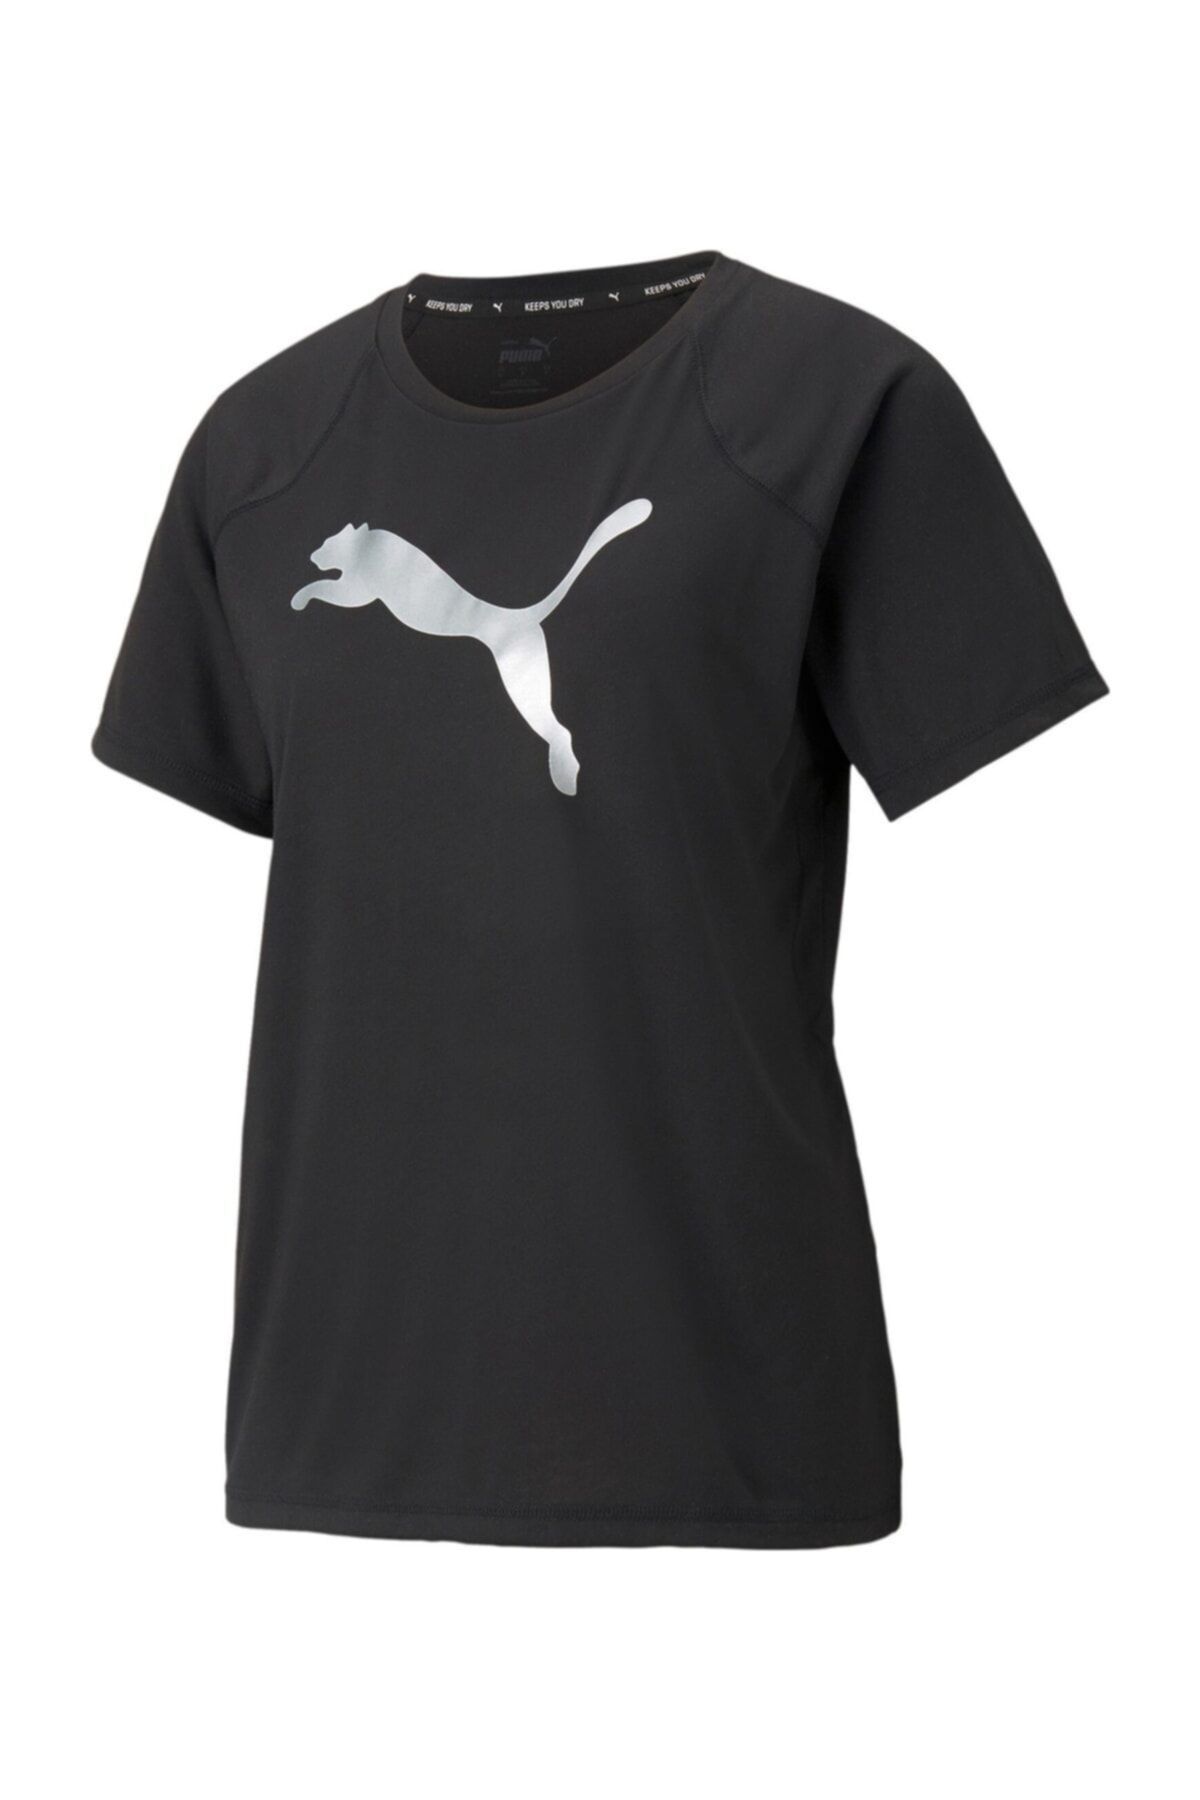 Puma Evostripe Tee Kadın Siyah T-shirt - 58914301